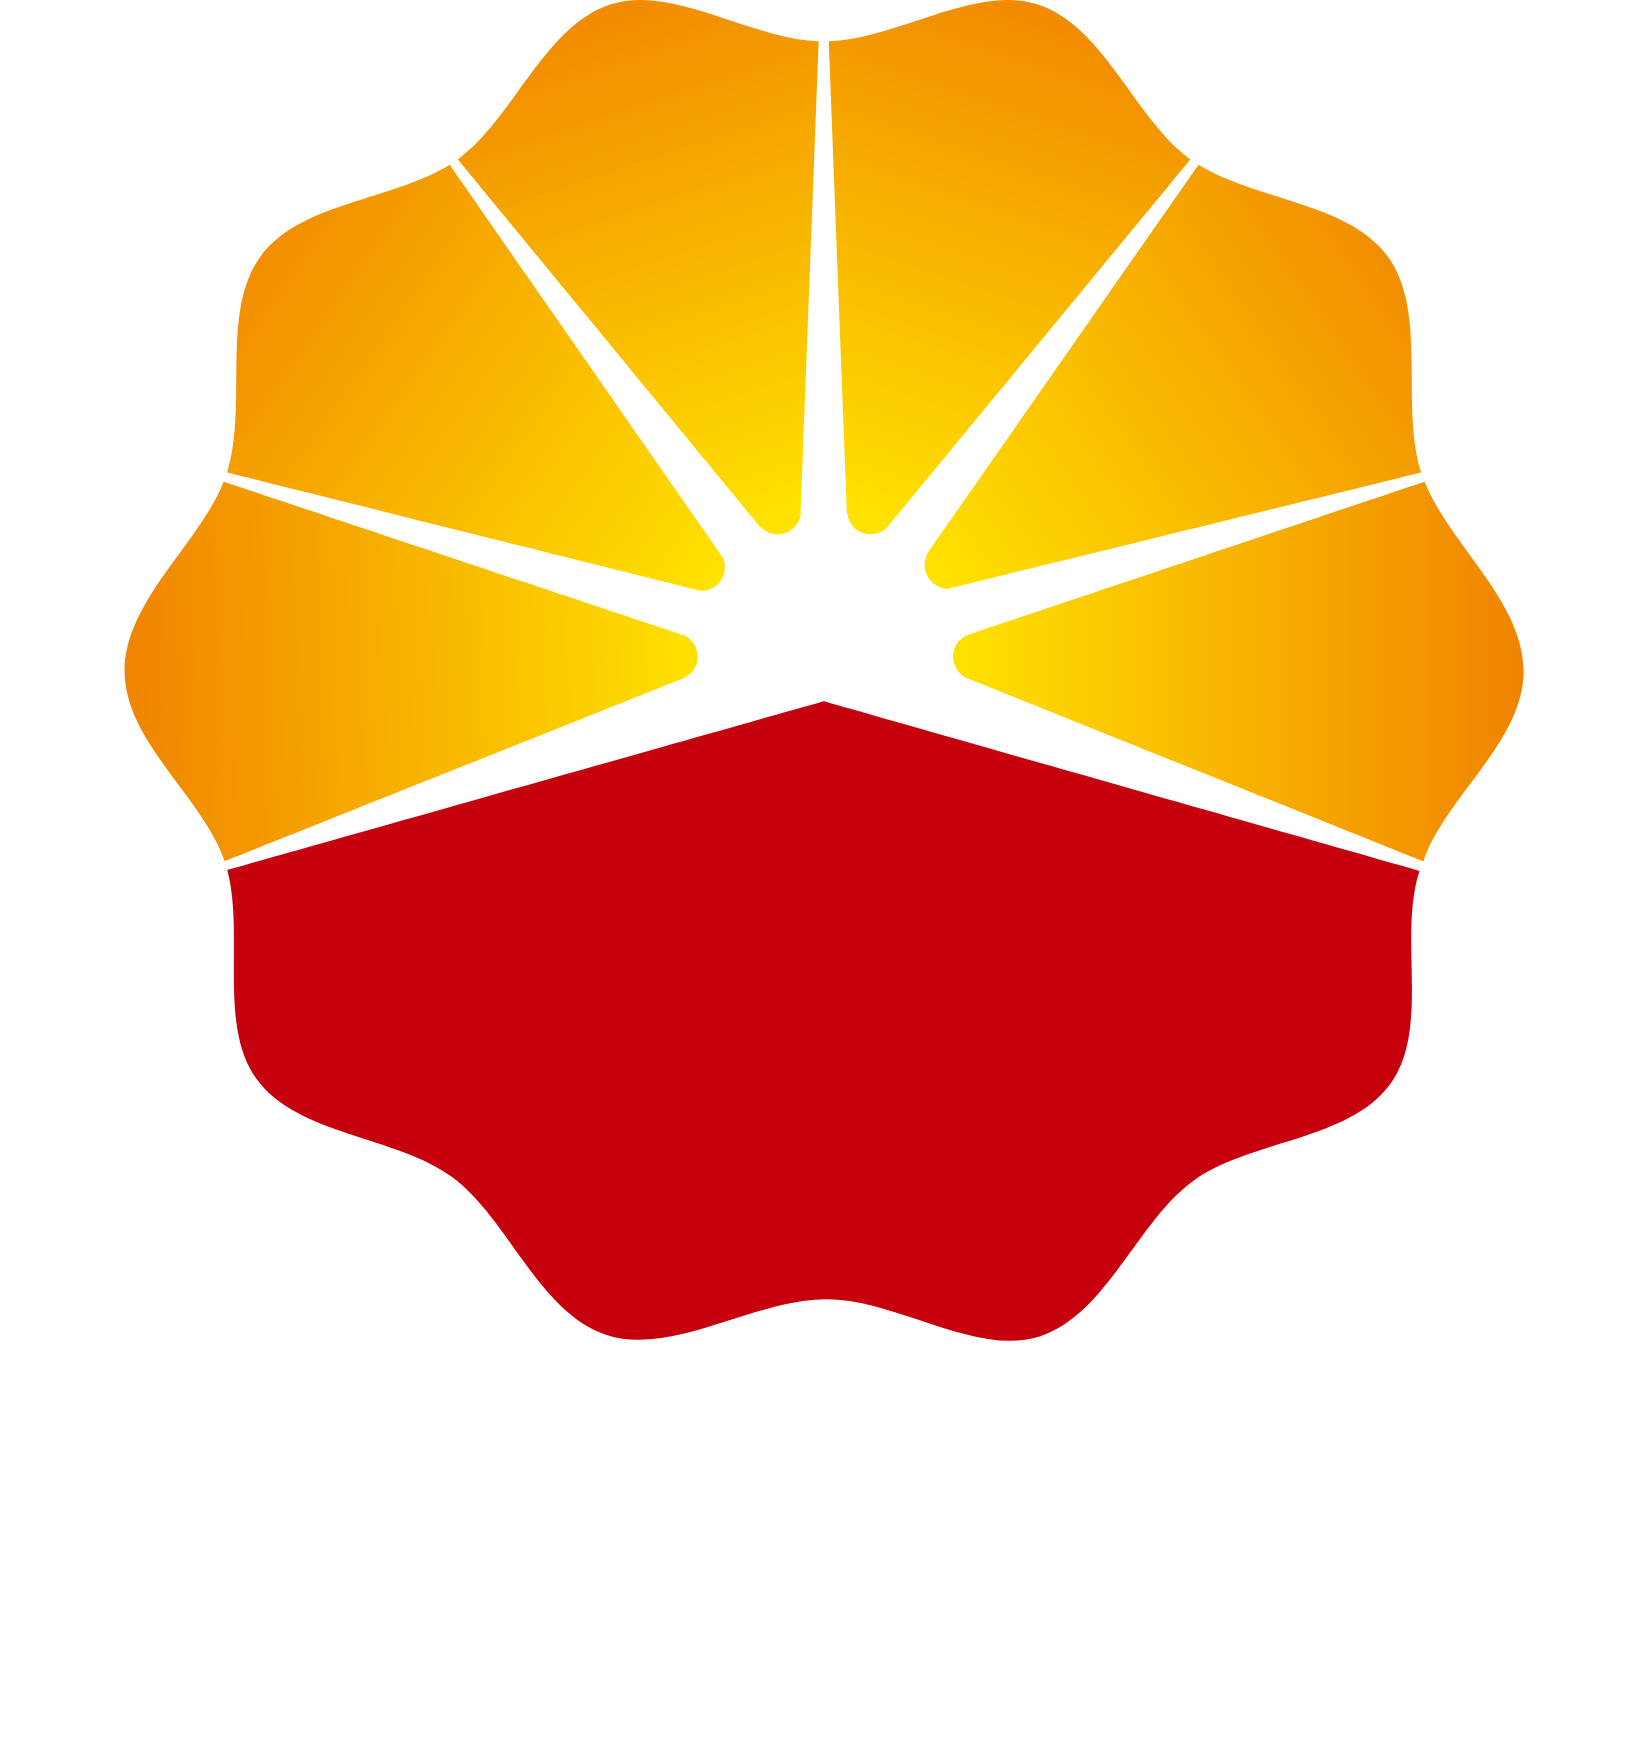 PetroChina logo large for dark backgrounds (transparent PNG)